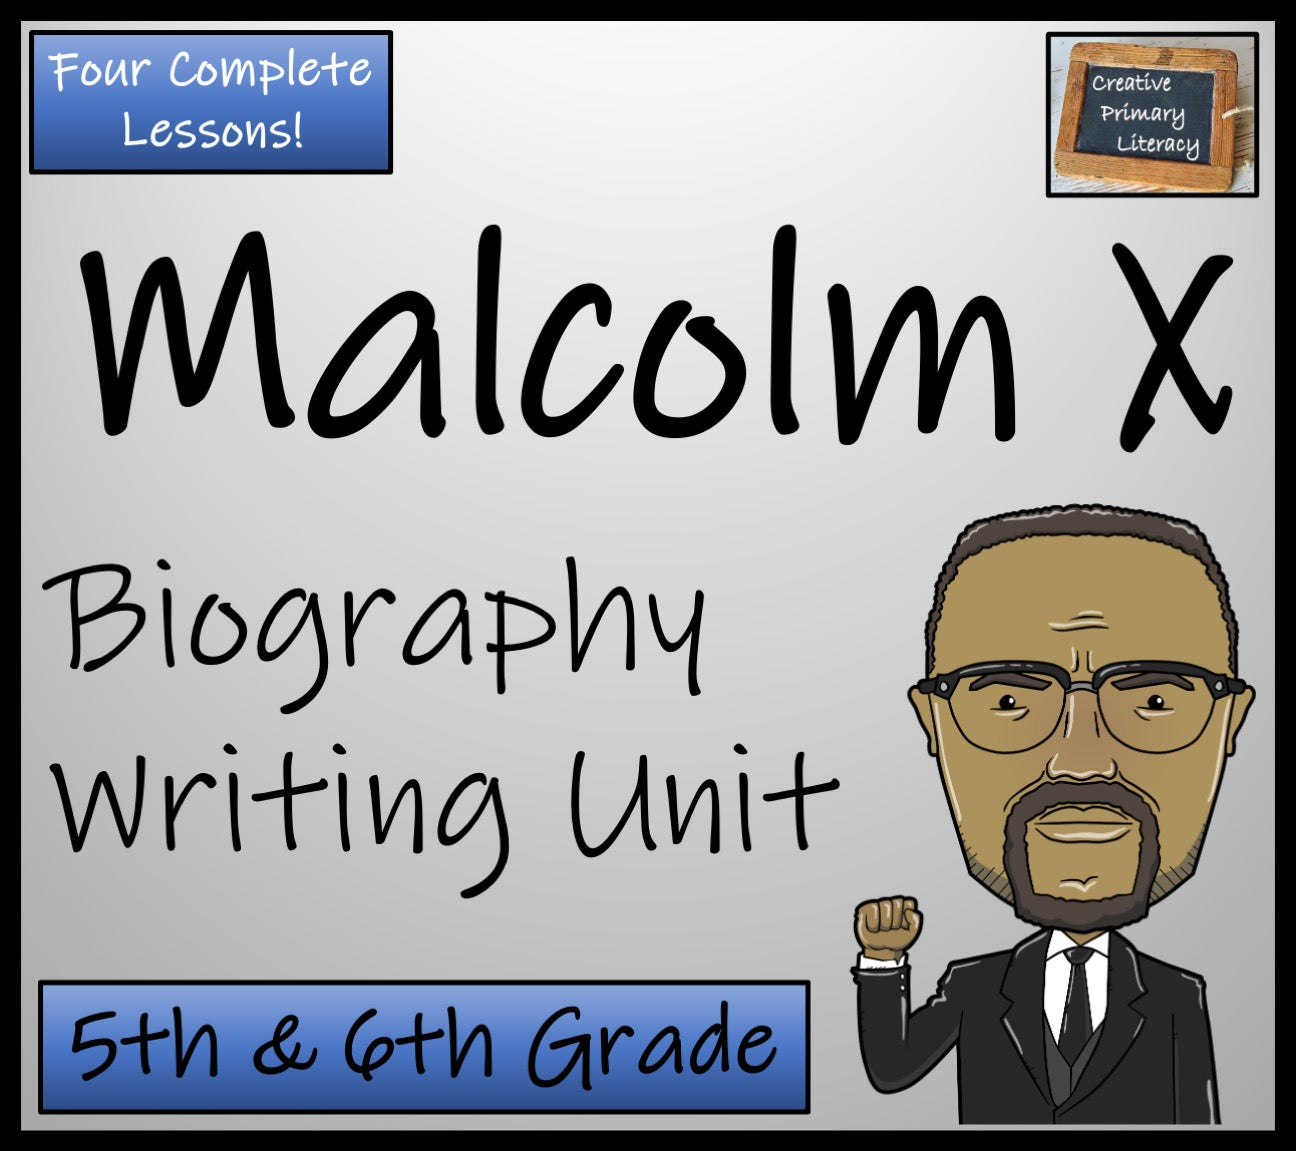 Malcolm X Biography Writing Unit | 5th Grade & 6th Grade